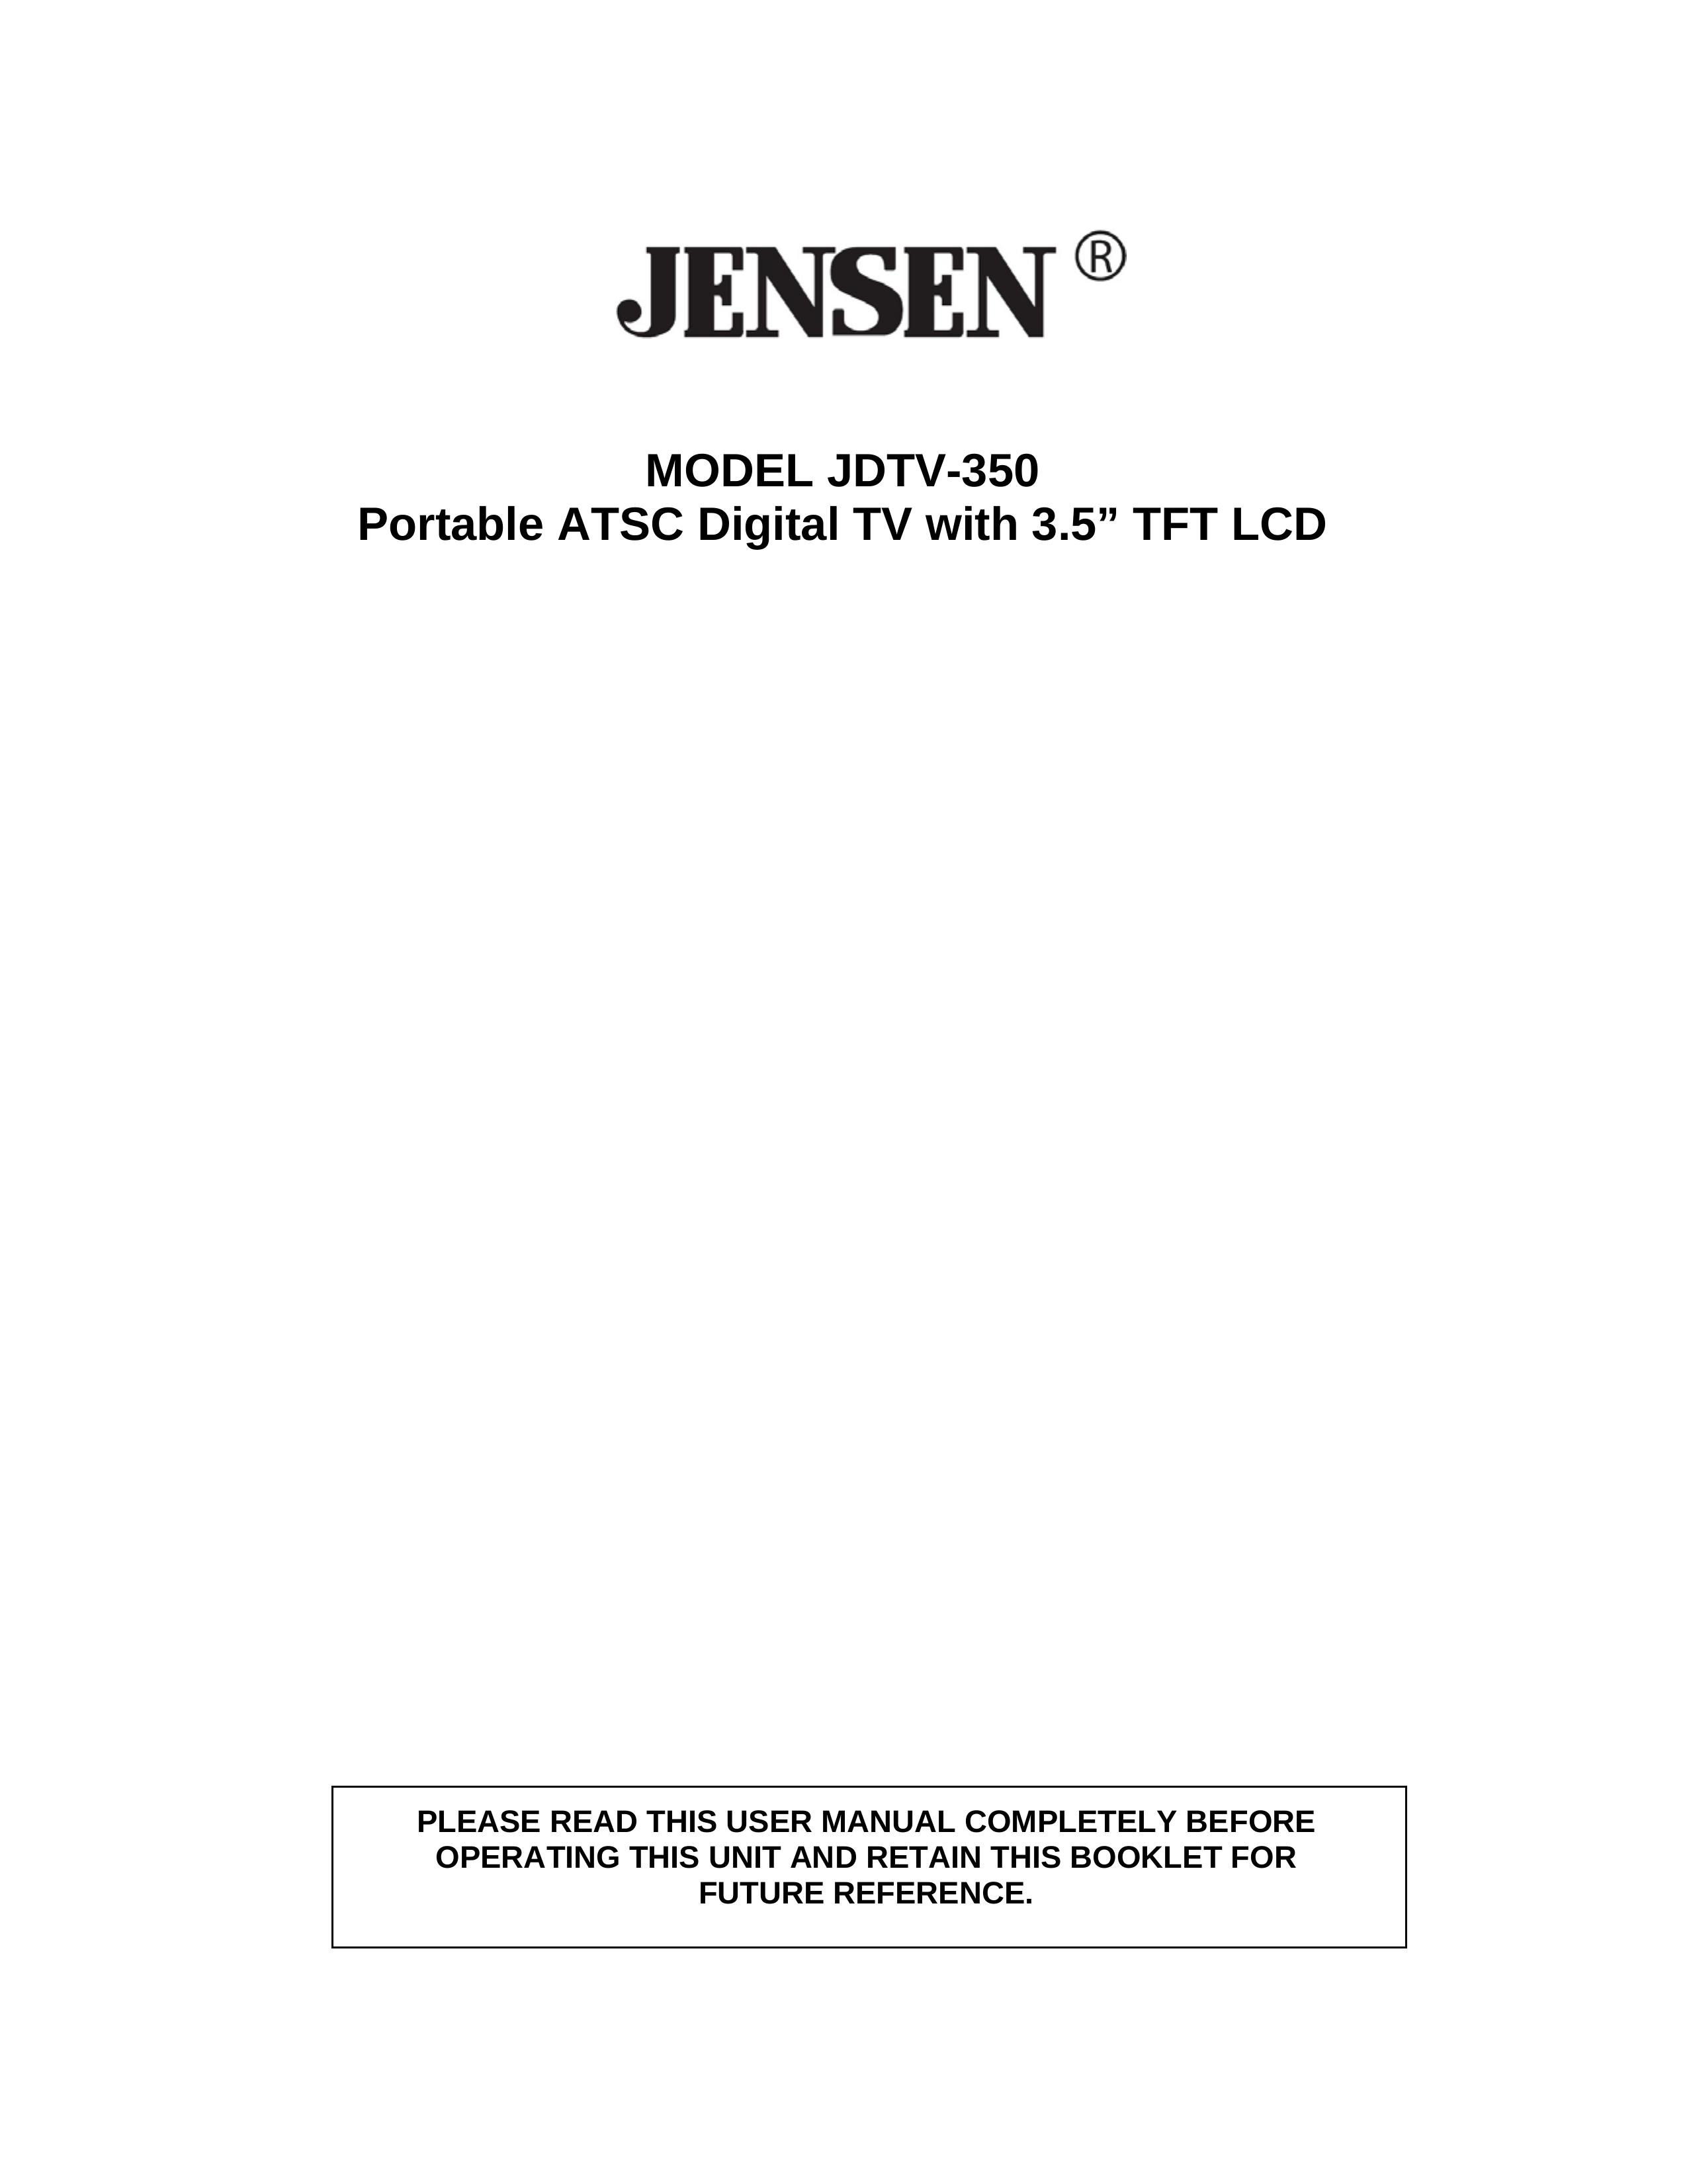 Jensen JDTV-350 Handheld TV User Manual